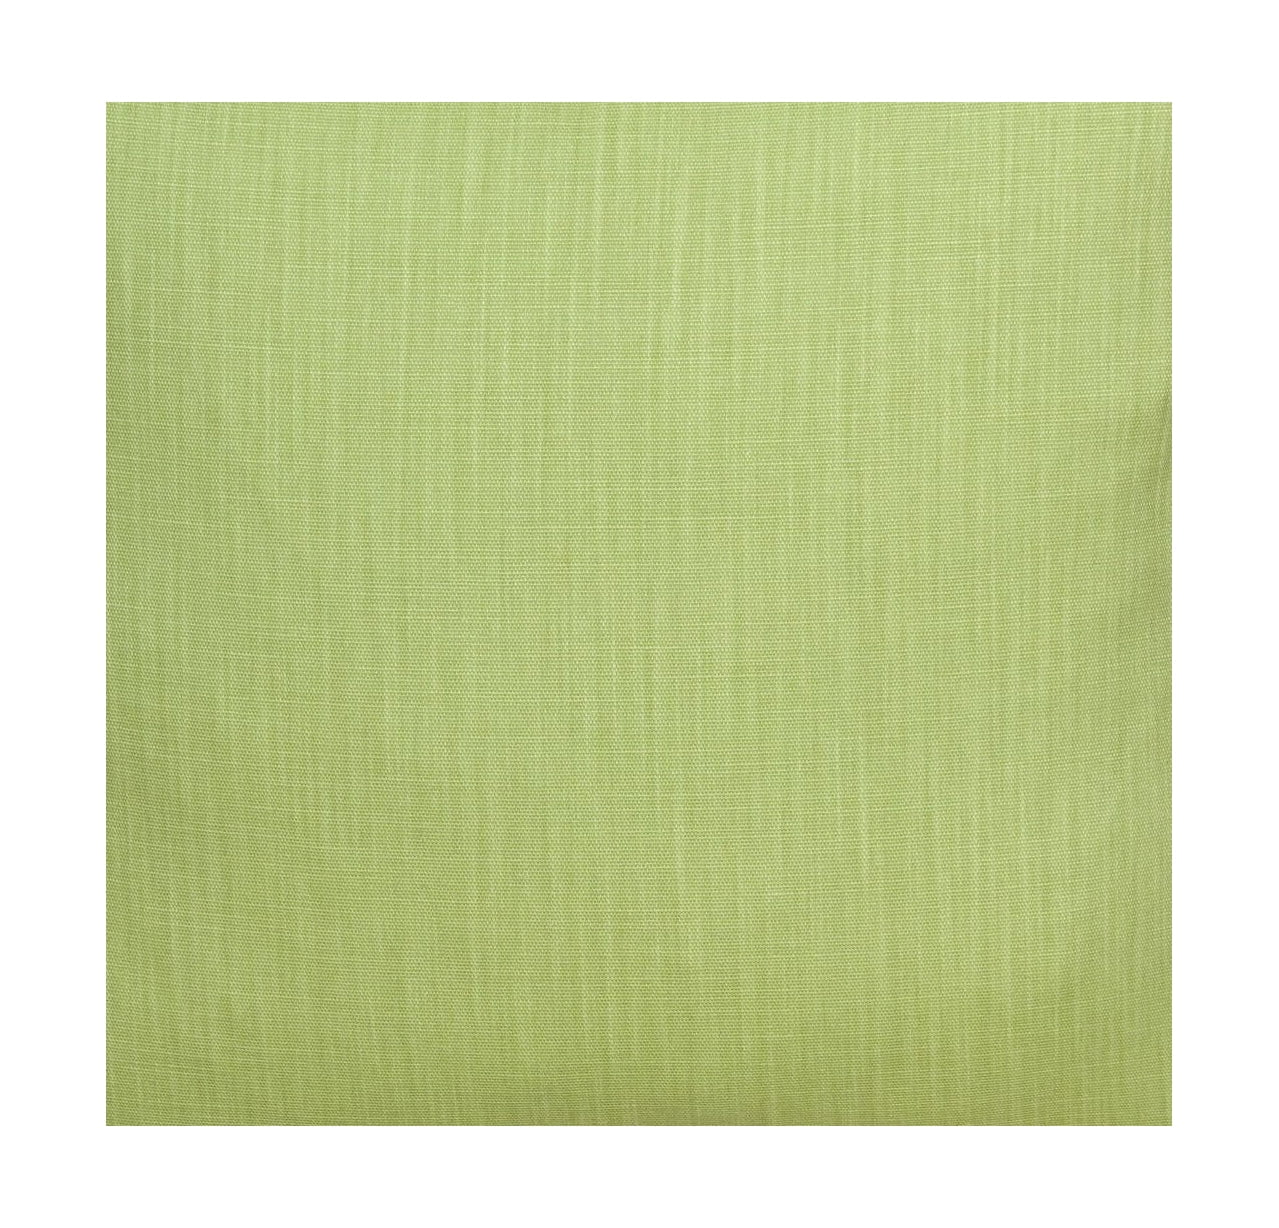 Larghezza del tessuto Spira Klotz 150 cm (prezzo per metro), verde chiaro